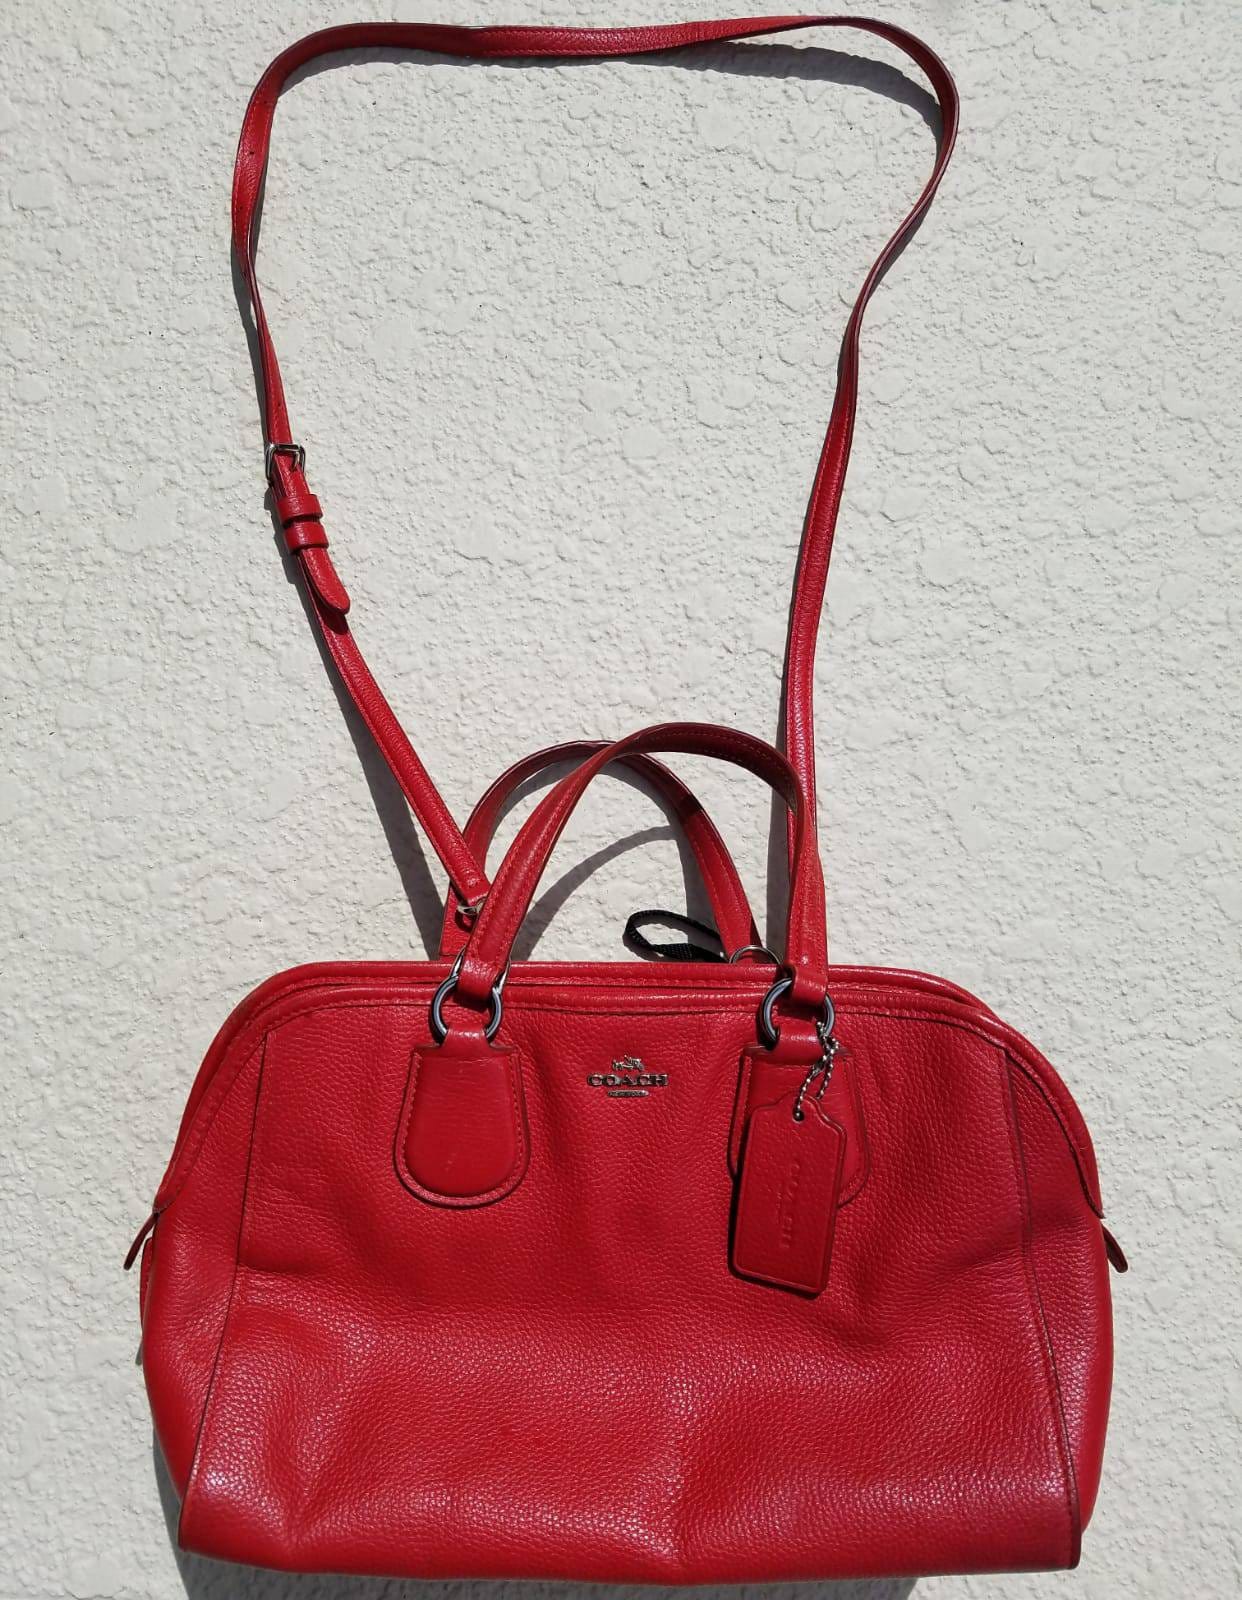 Coach Leatherware Est. 1941 Red Leather Handbag Purse Bag Tote | eBay